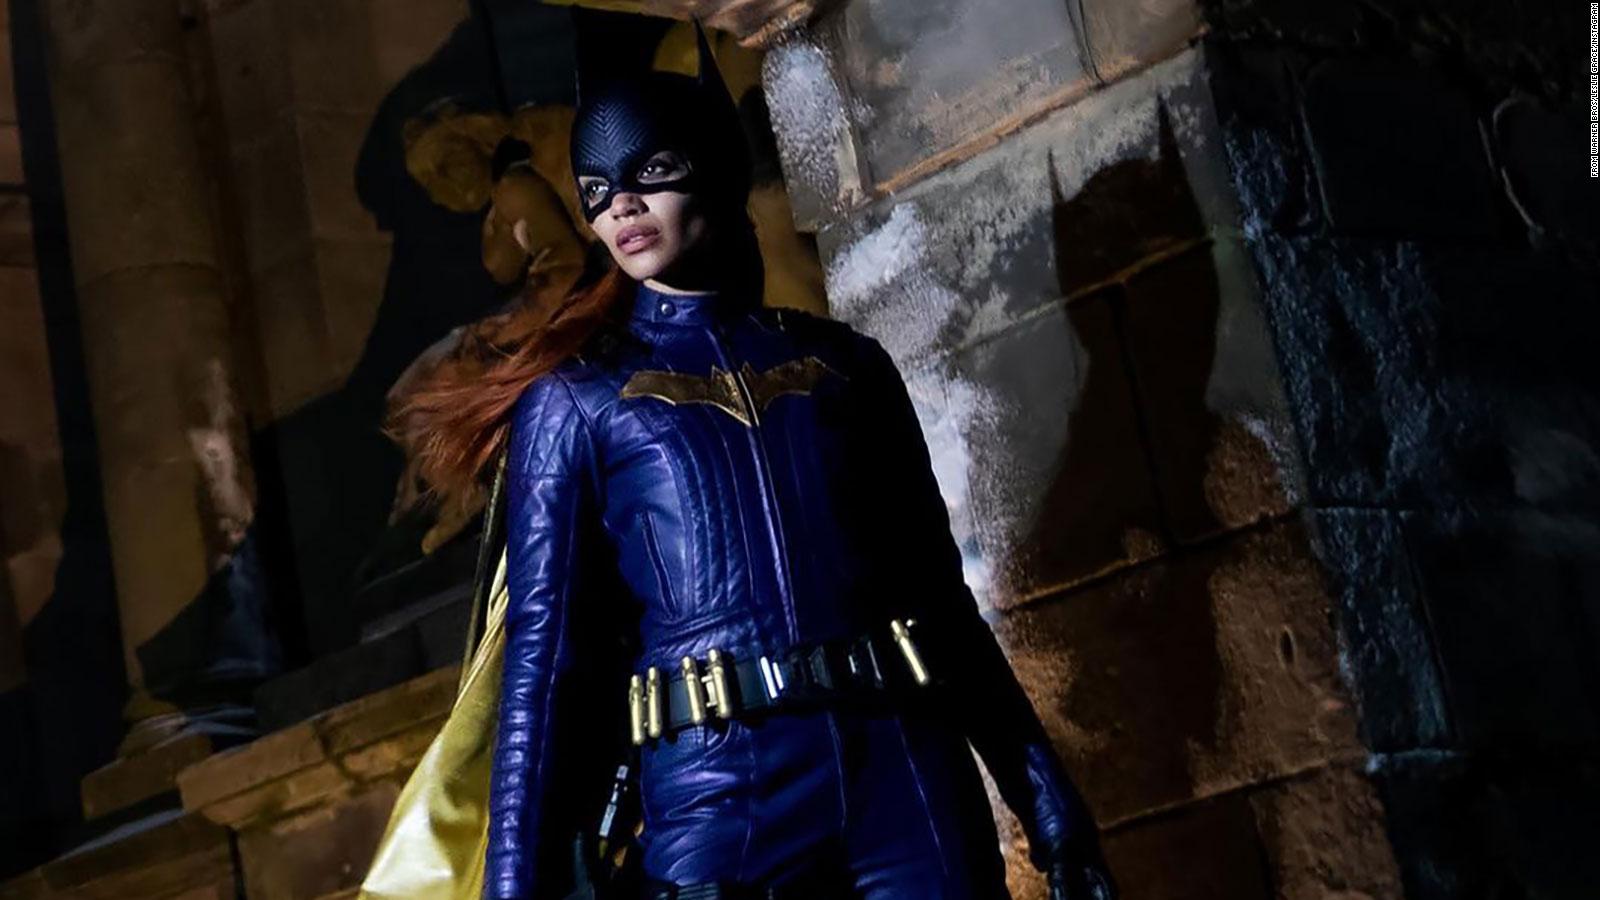 Batgirl" de Warner Bros. ya no llegará a tu pantalla